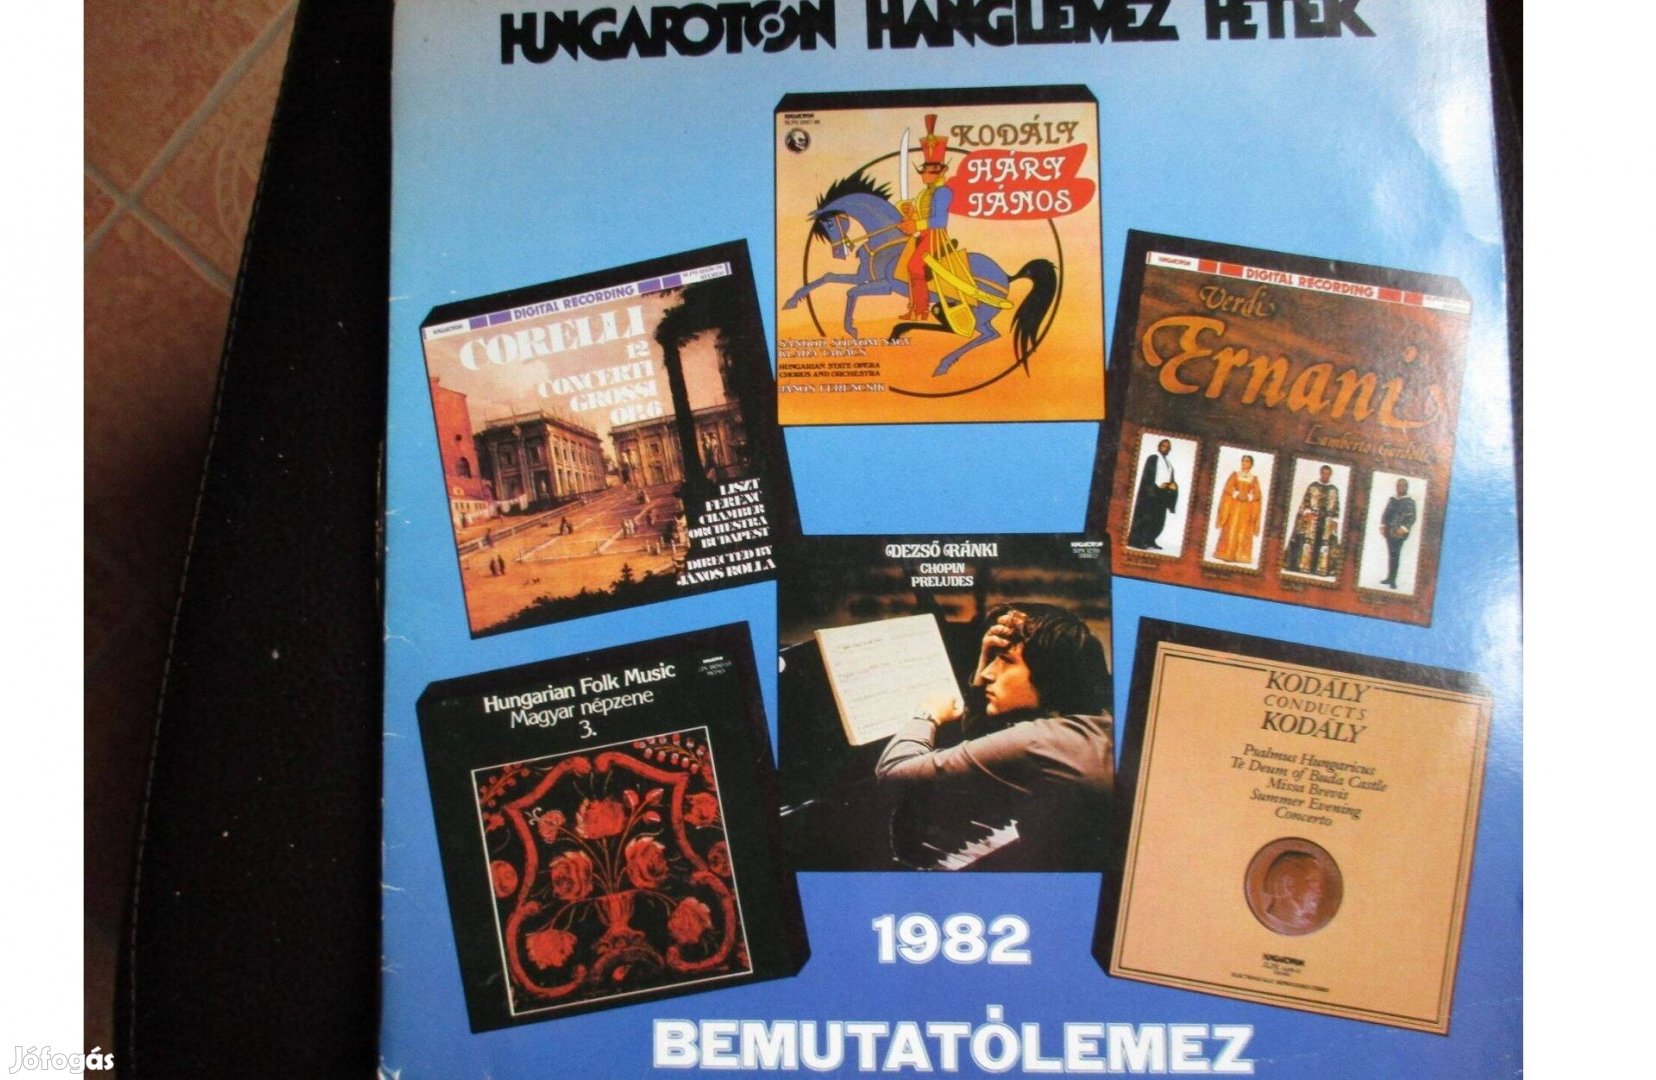 Hungaroton hanglemez hetek bemutatólemez eladó